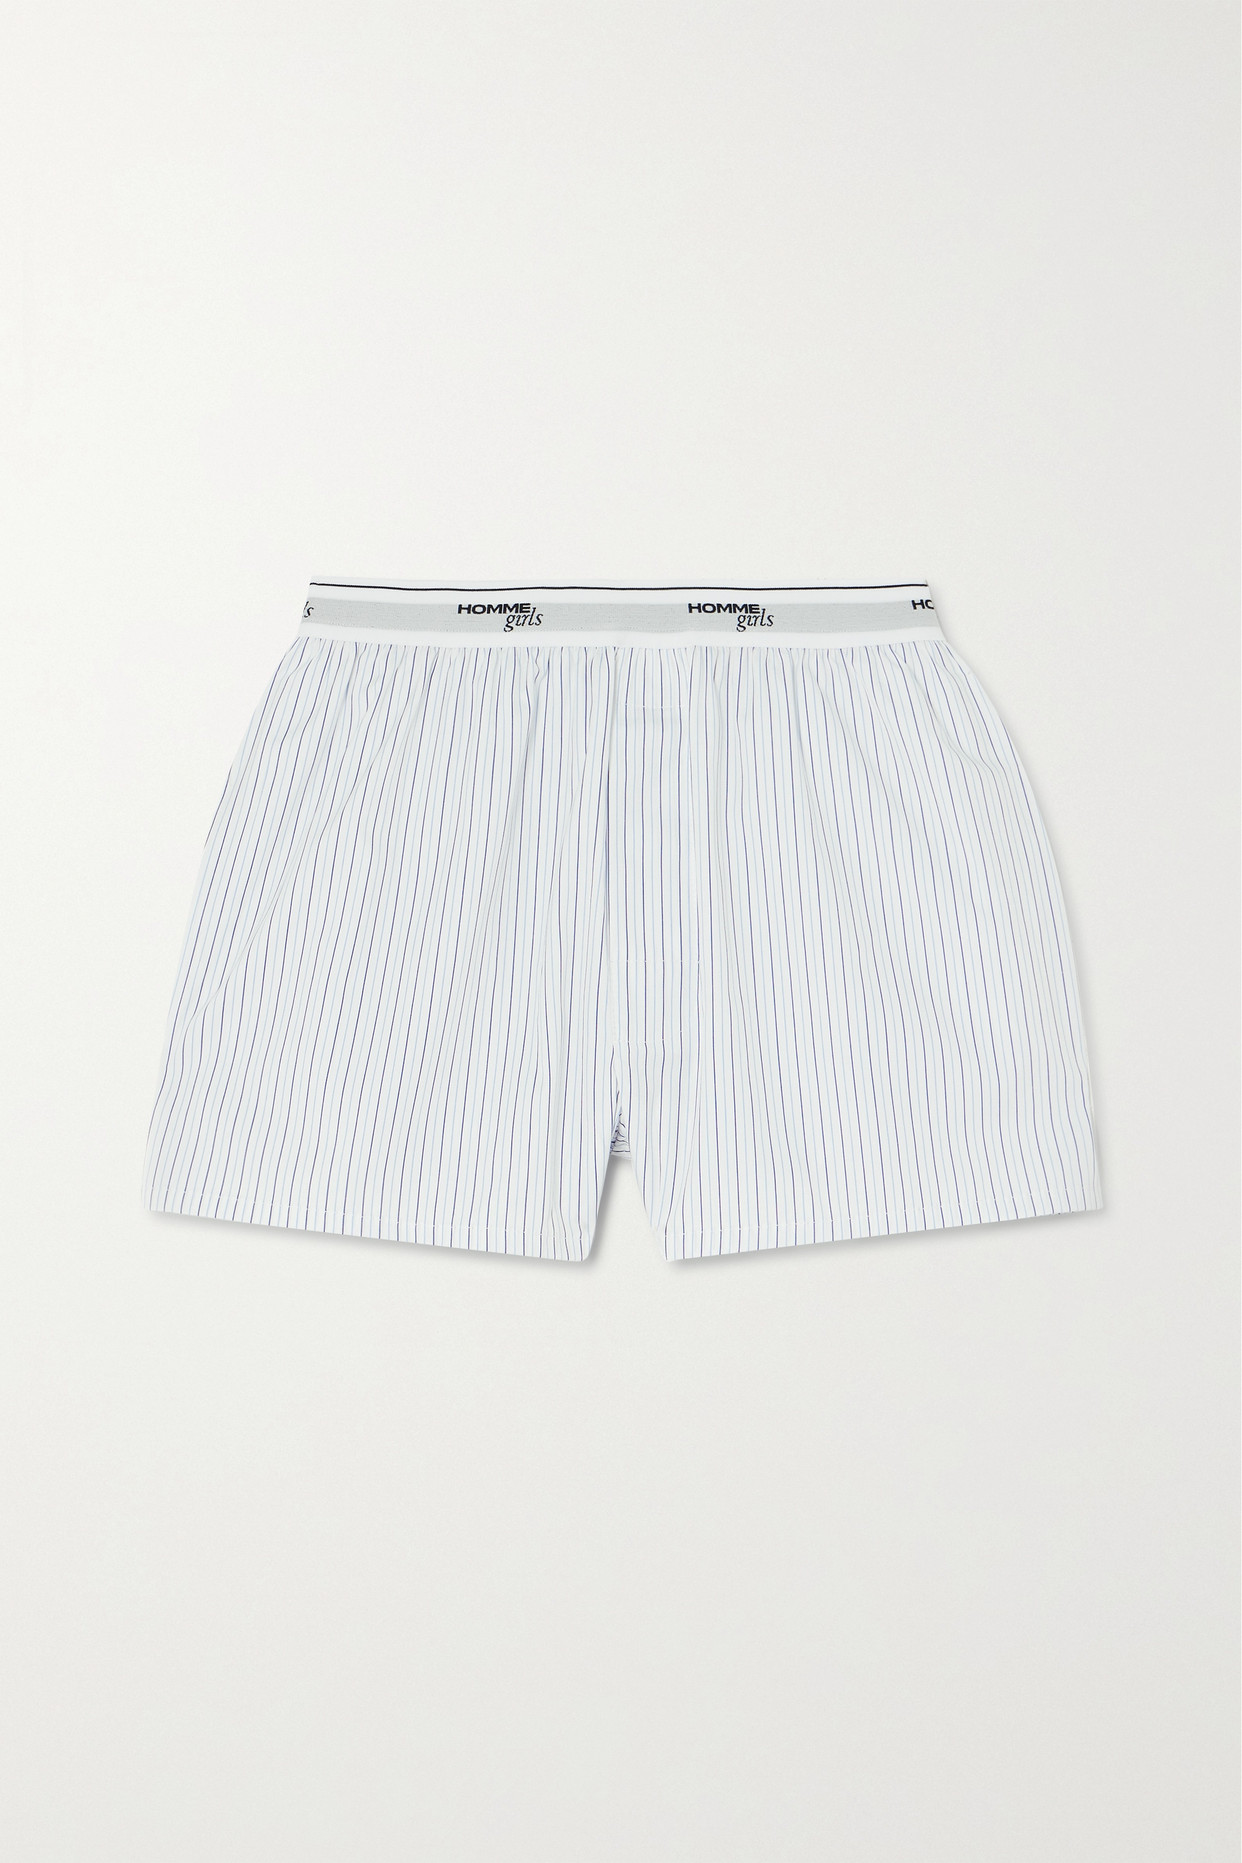 Striped Cotton-Poplin Shorts